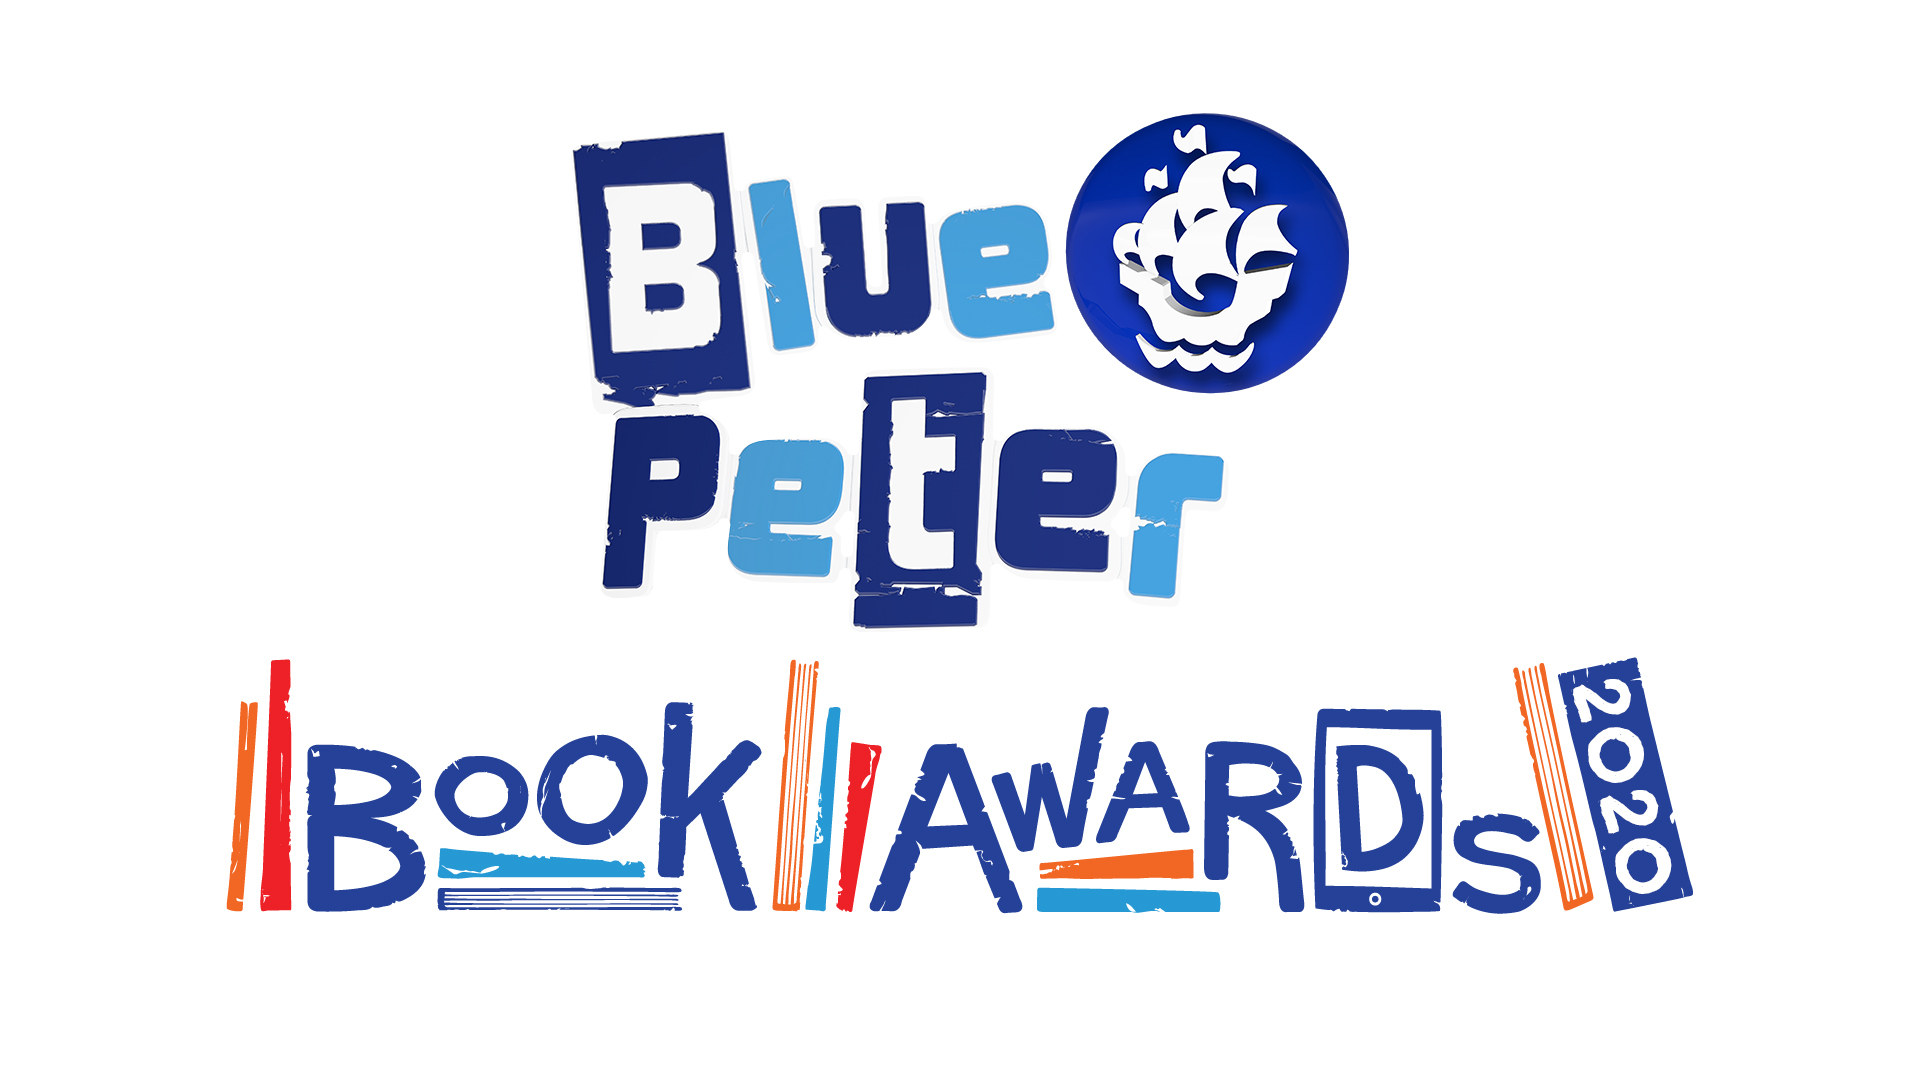 Image result for blue peter book awards 2019